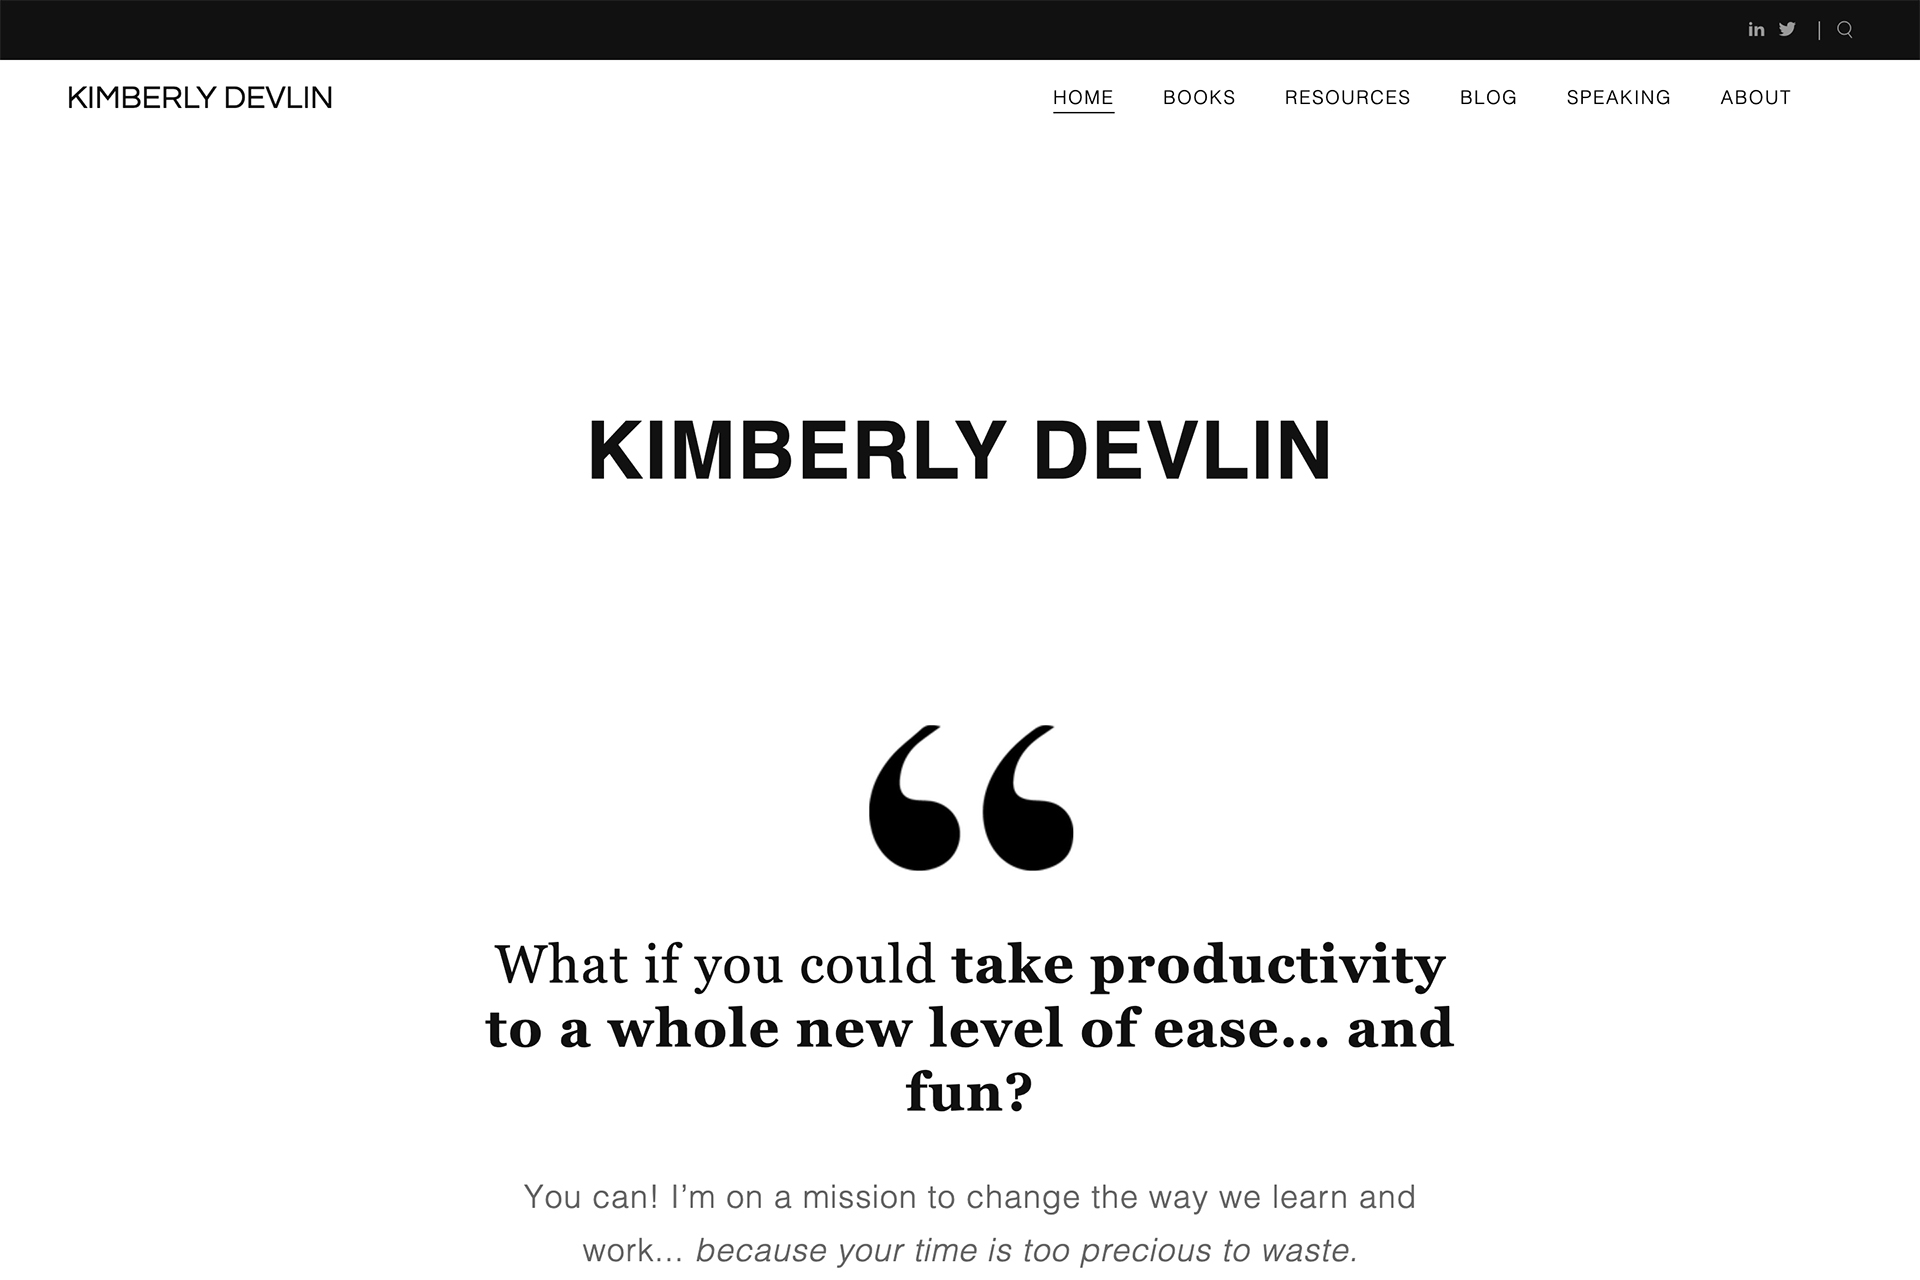 Weebly website example 7 - Kimberly Devlin